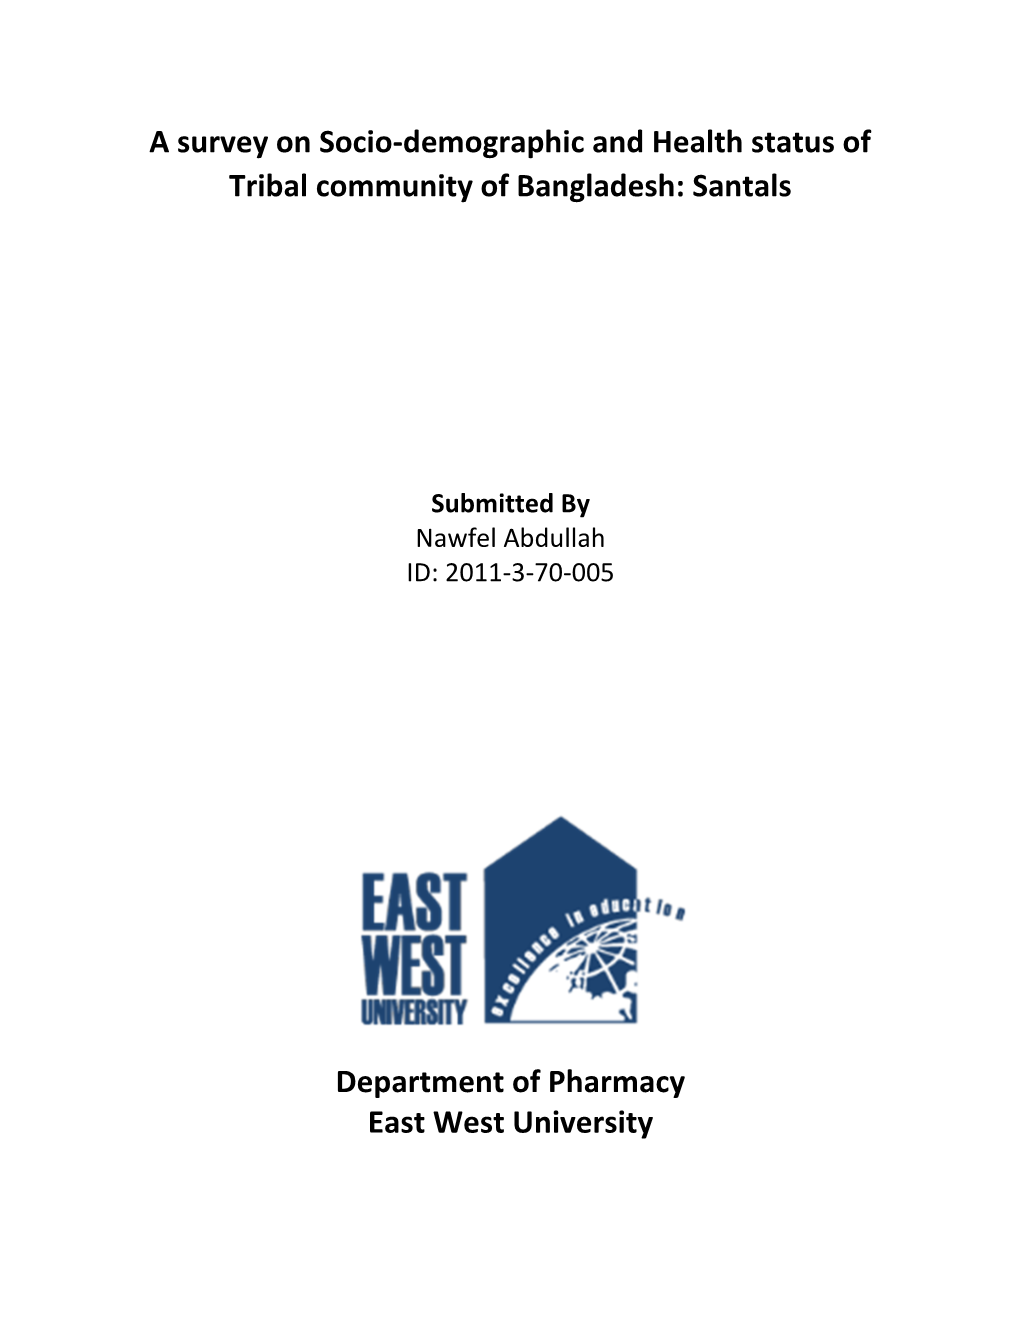 A Survey on Socio-Demographic and Health Status of Tribal Community of Bangladesh: Santals